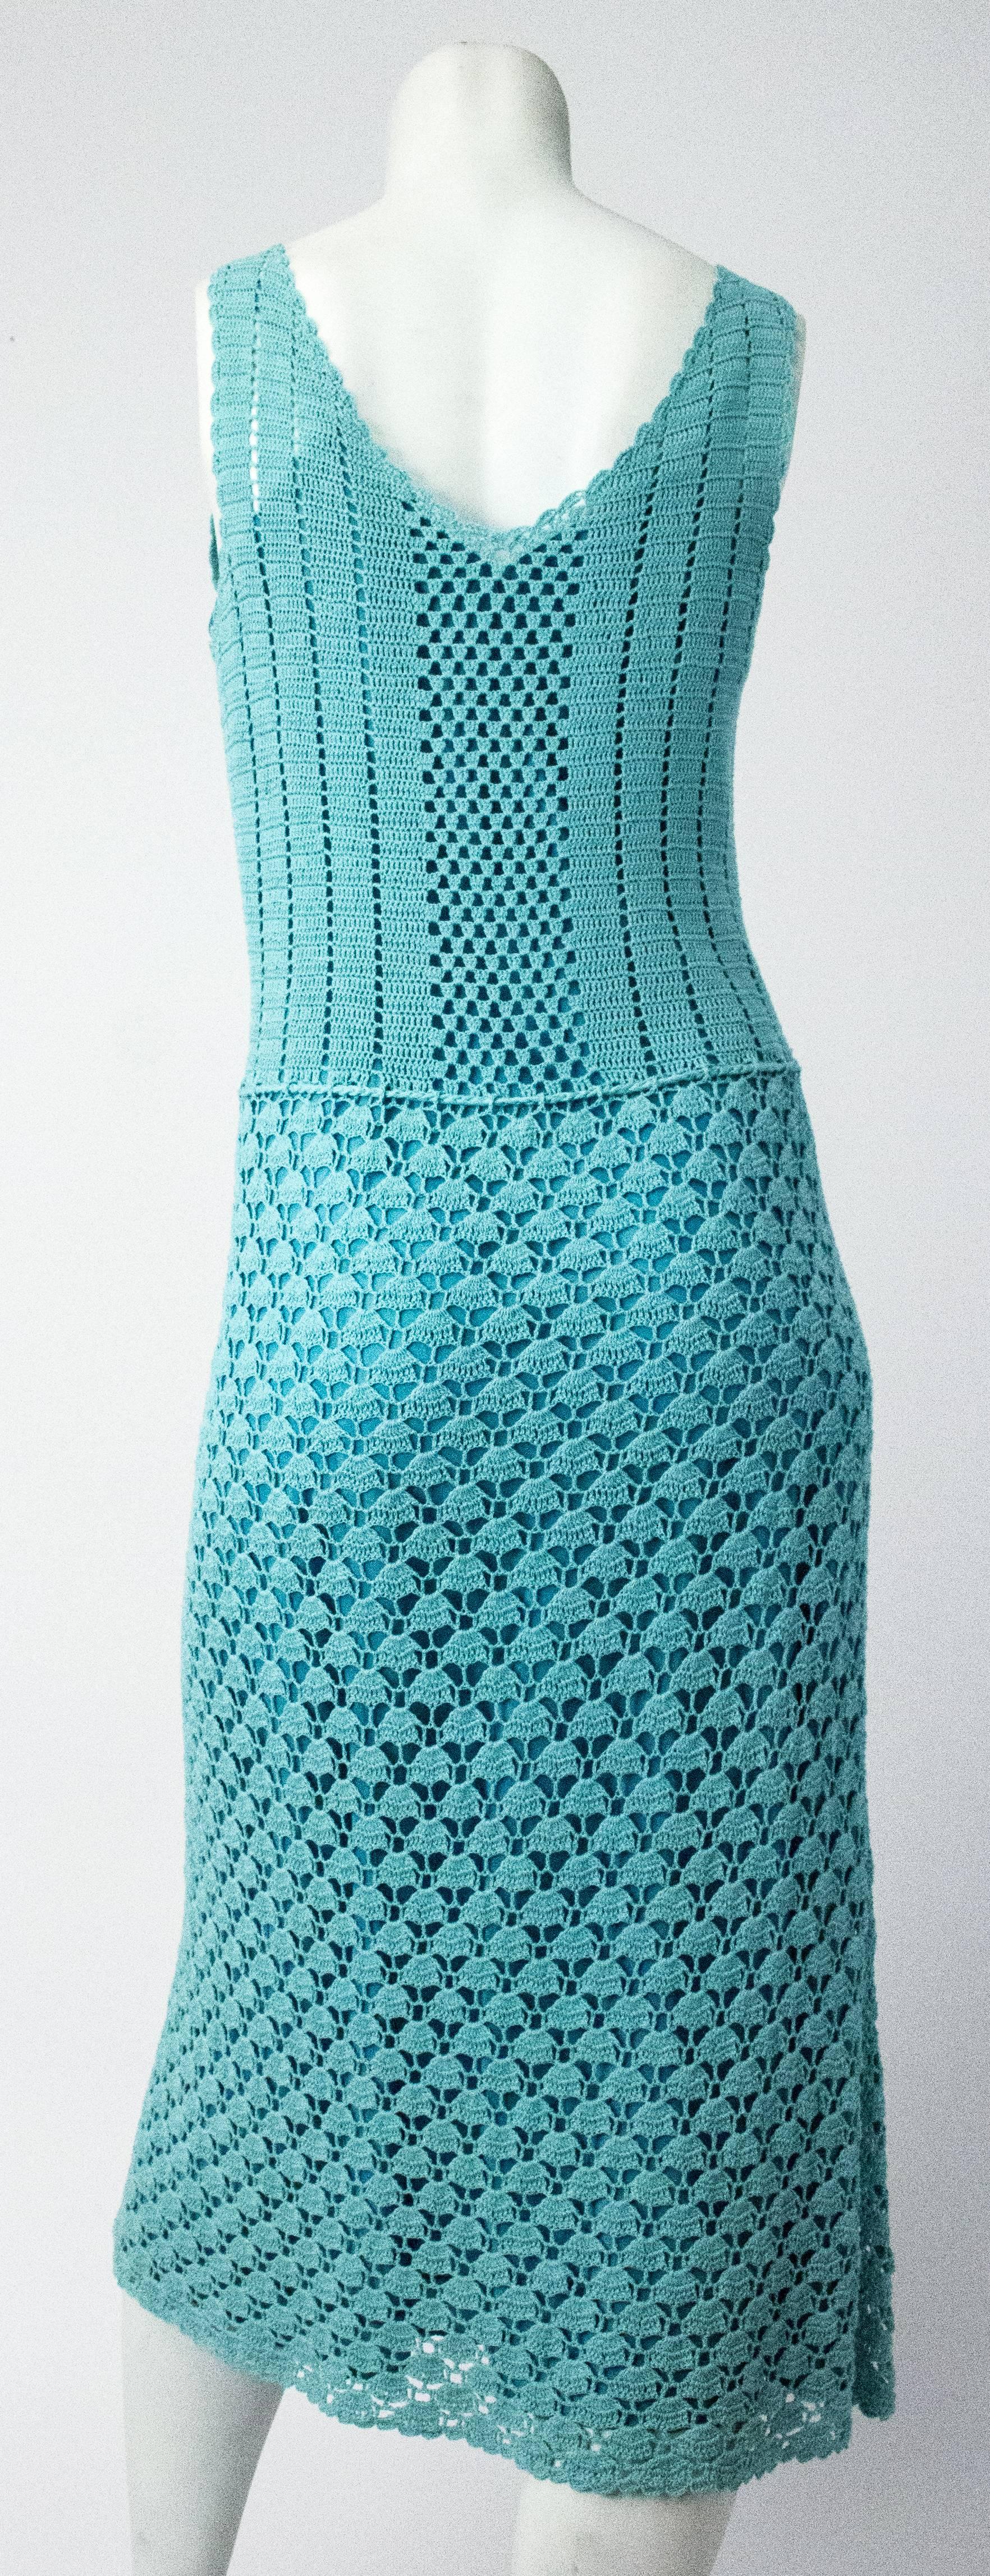 70s Aqua Blue Crochet Sleeveless Dress with Slip. Original matching waist tie. 